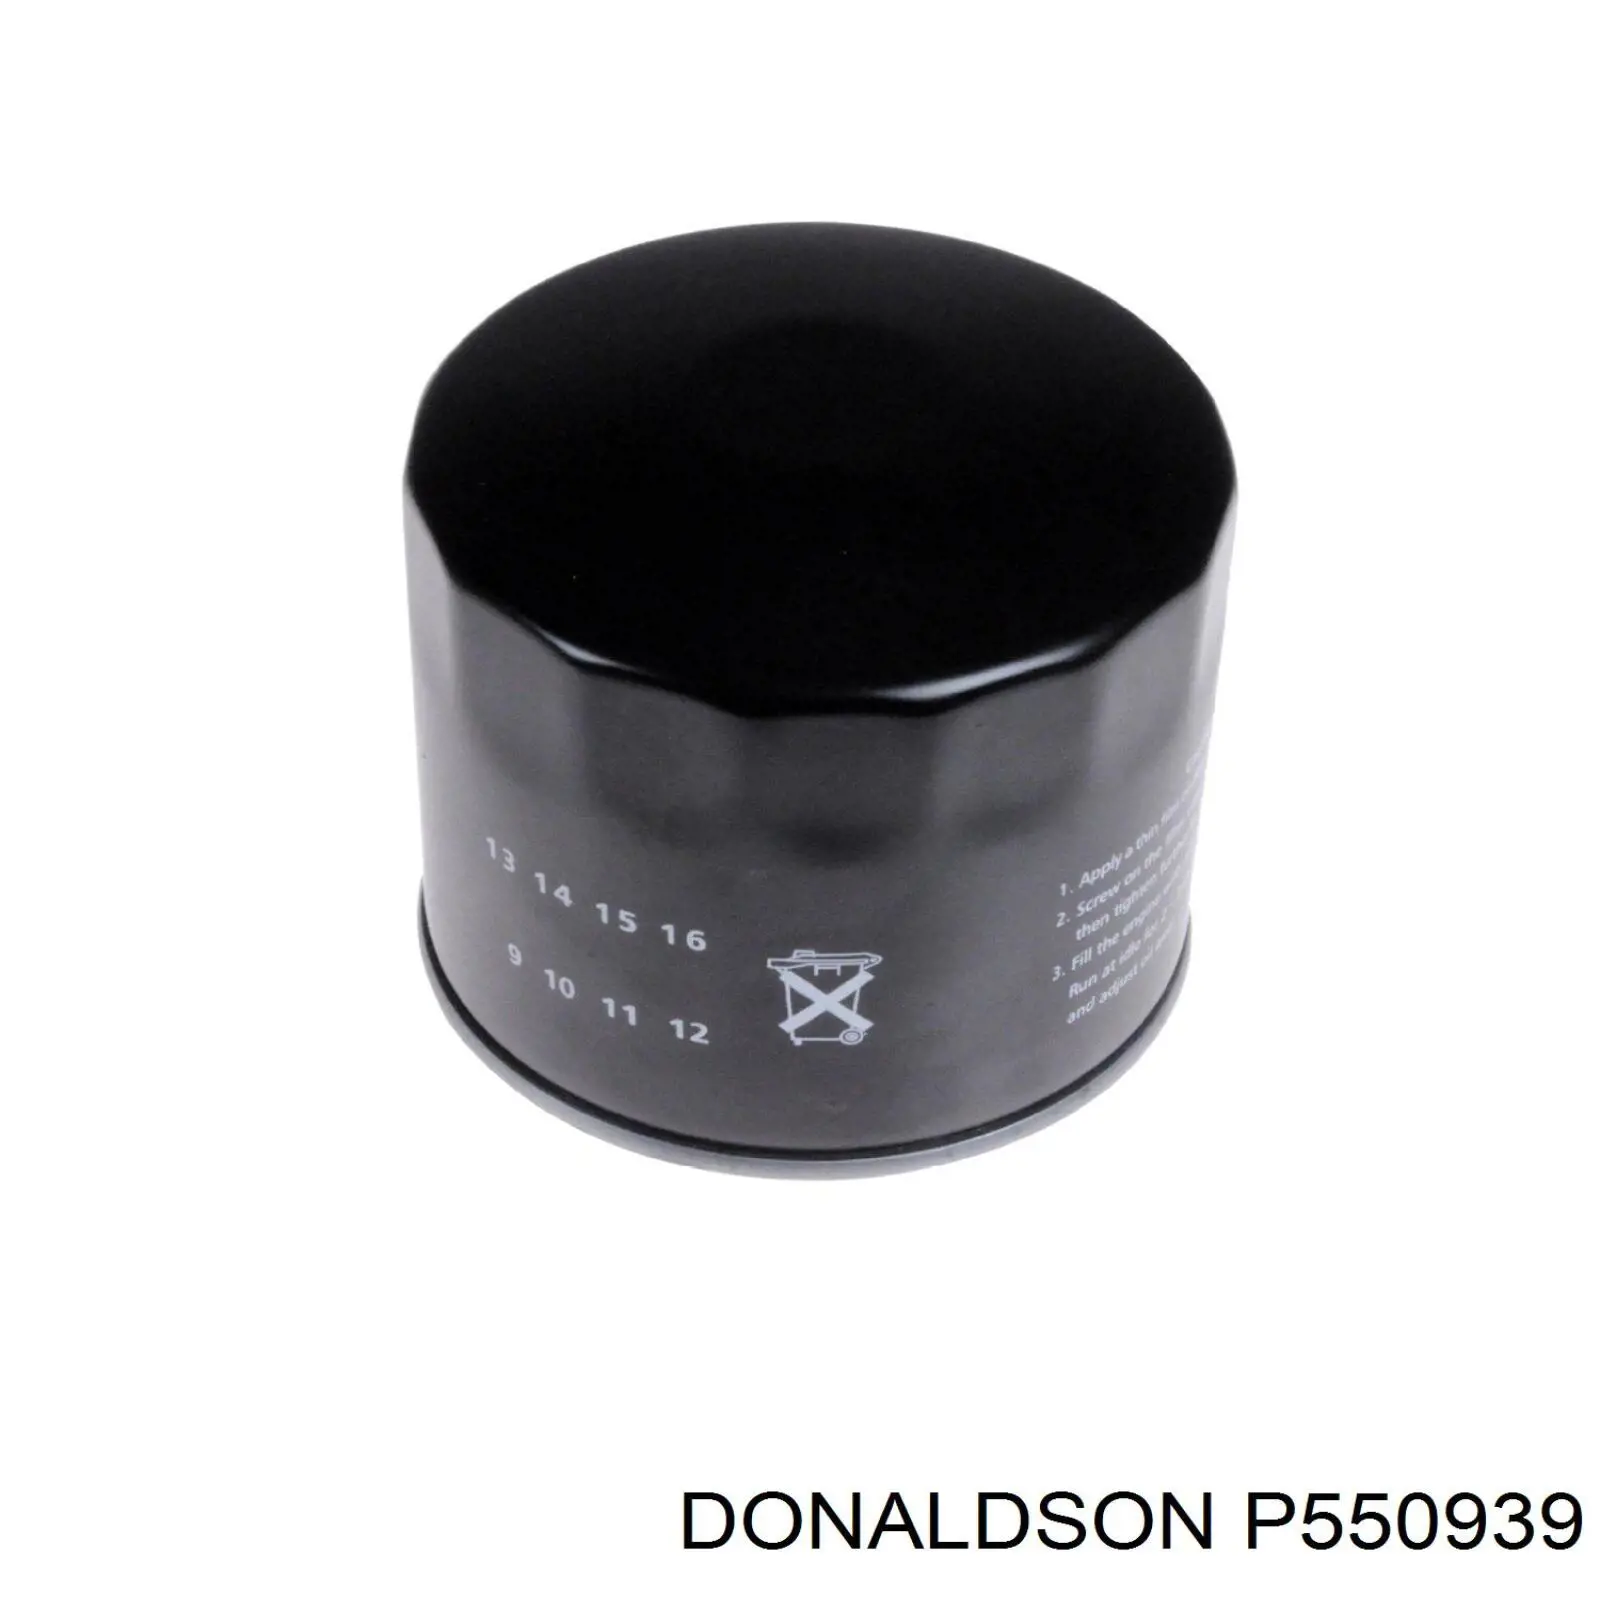 P550939 Donaldson filtro de óleo